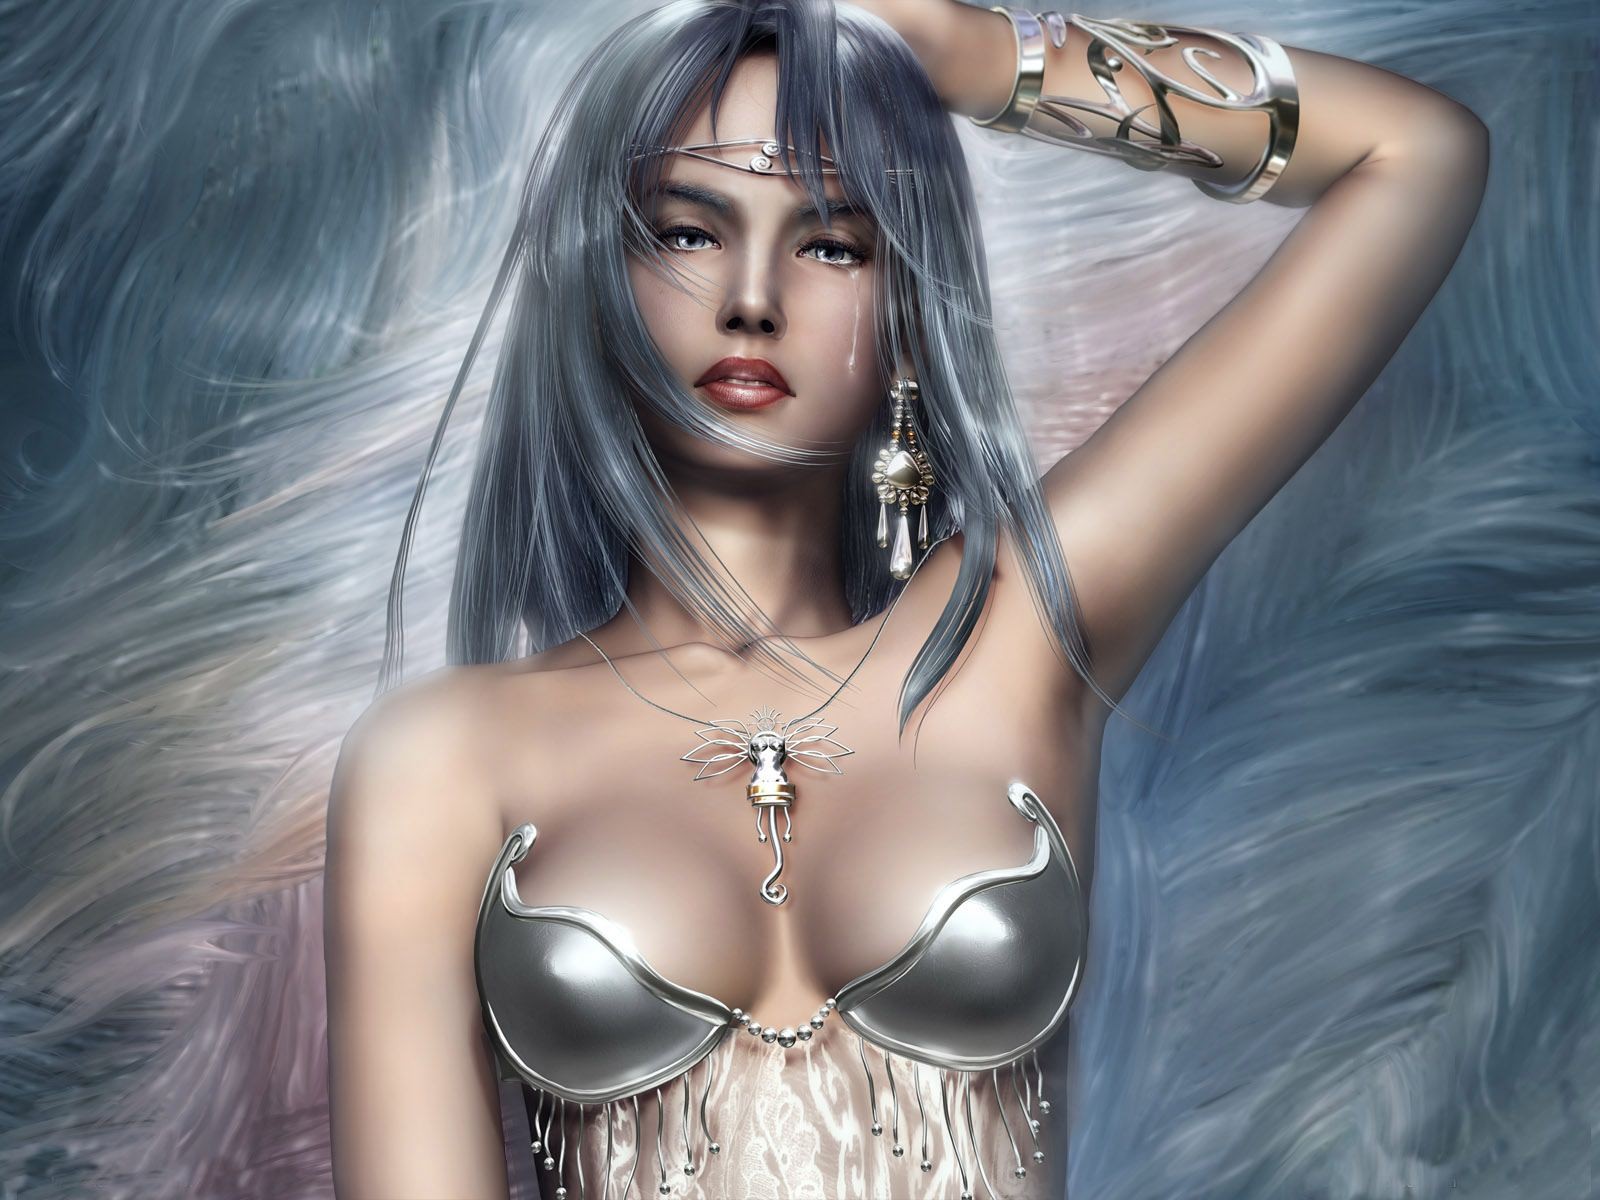 Fantasia Models' Lili: The Ultimate Erotic Fantasy Come to Life